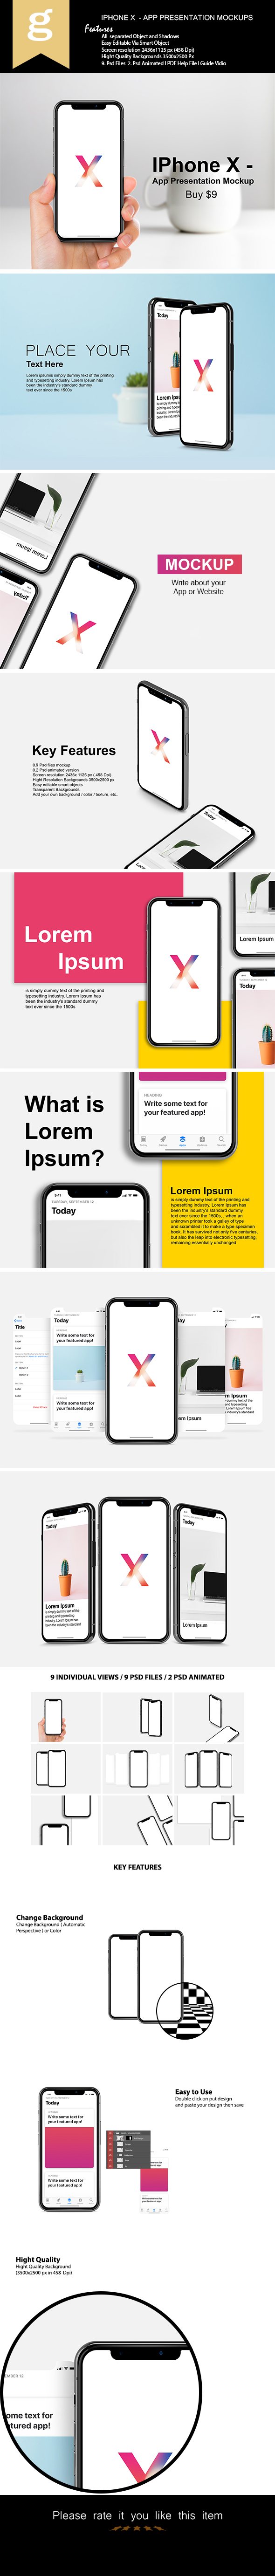 apple application Display imodern Mockup presentation showcase free iPhone x app